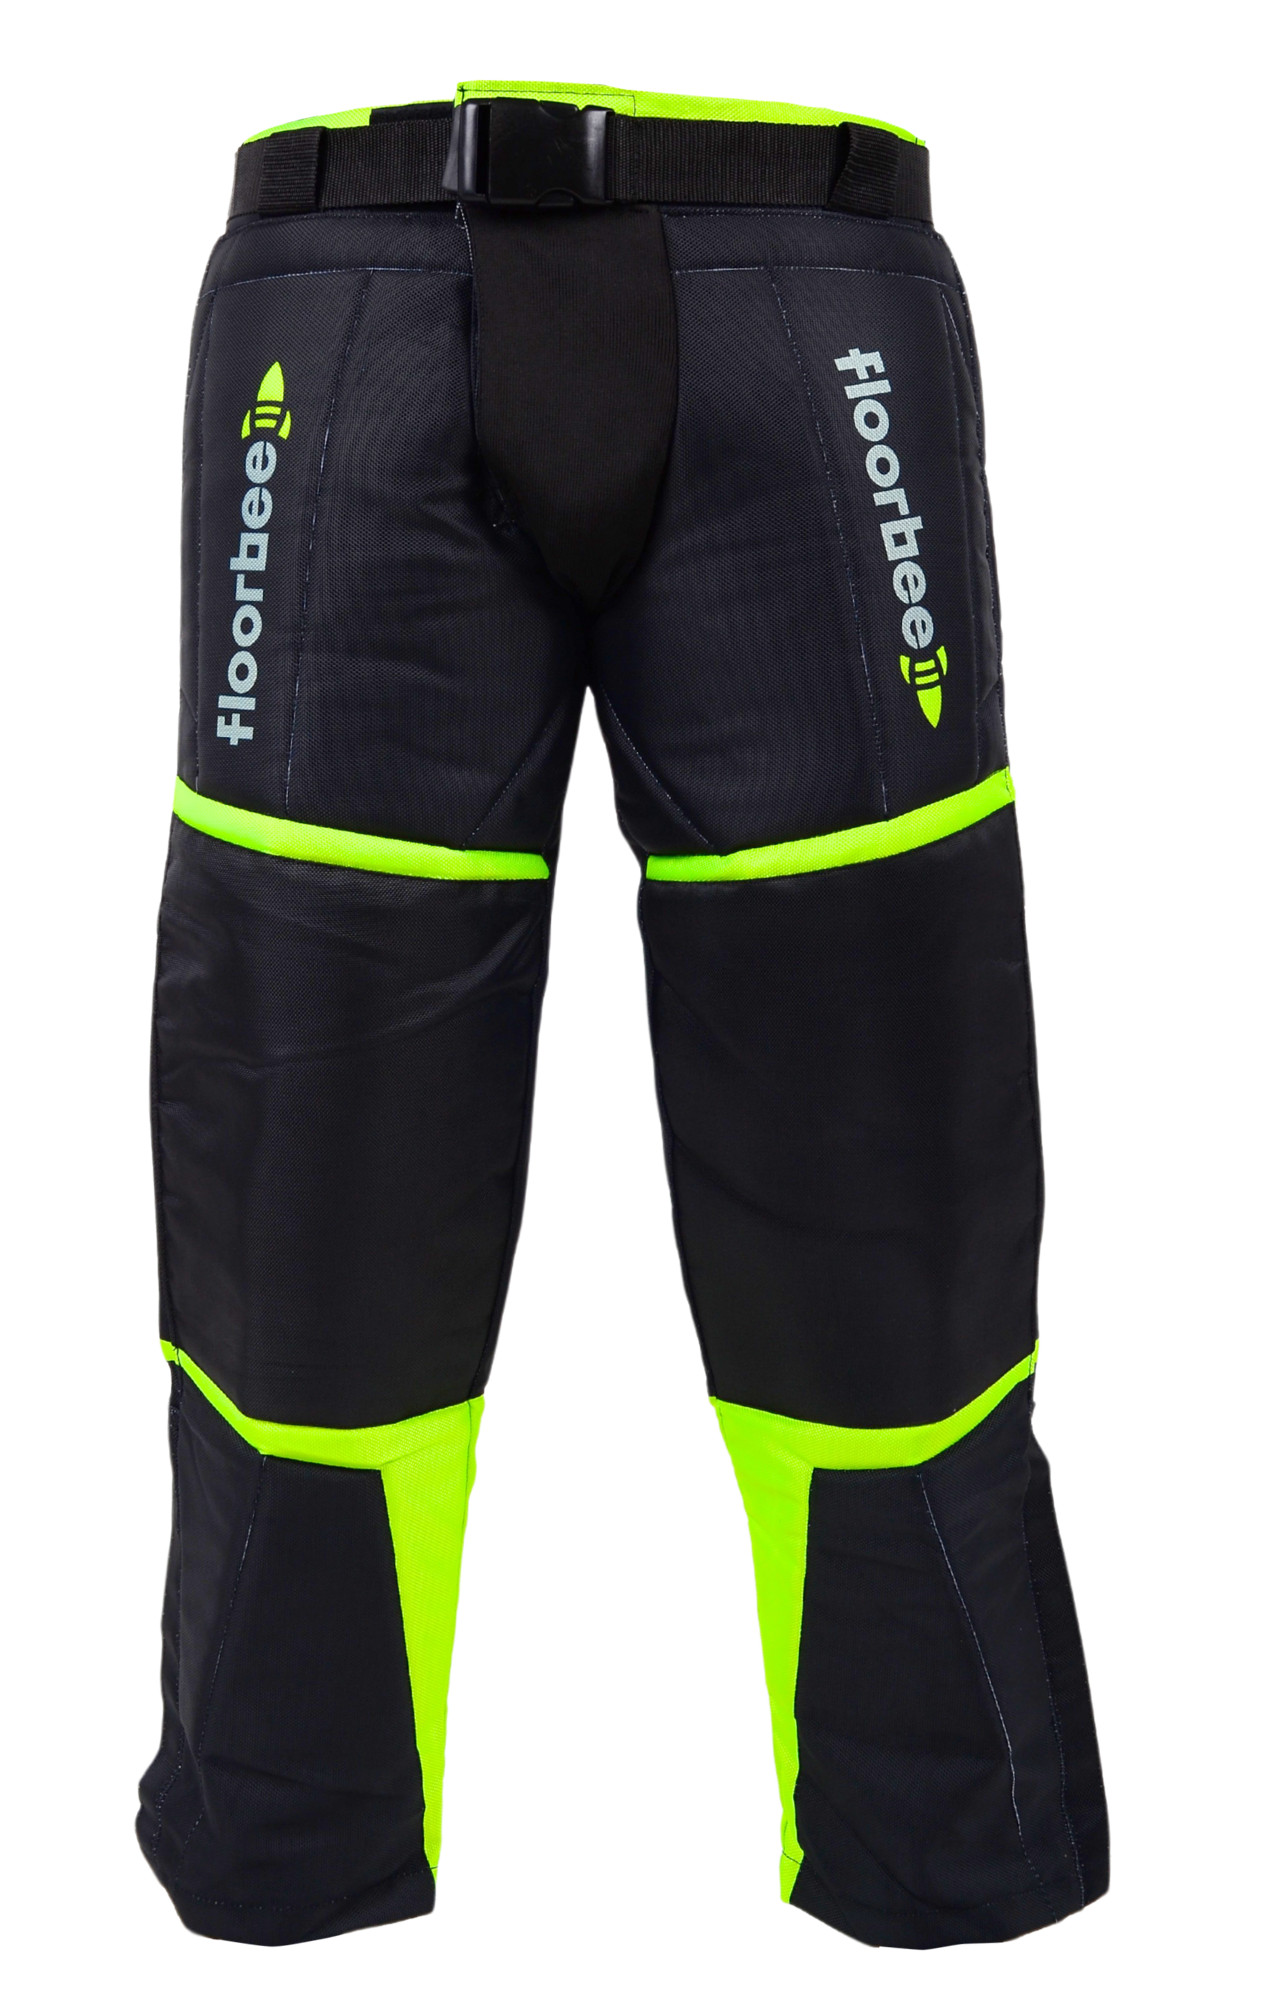 FLOORBEE Goalie Armor Pants 3.0 - black/yellow M, černá / žlutá